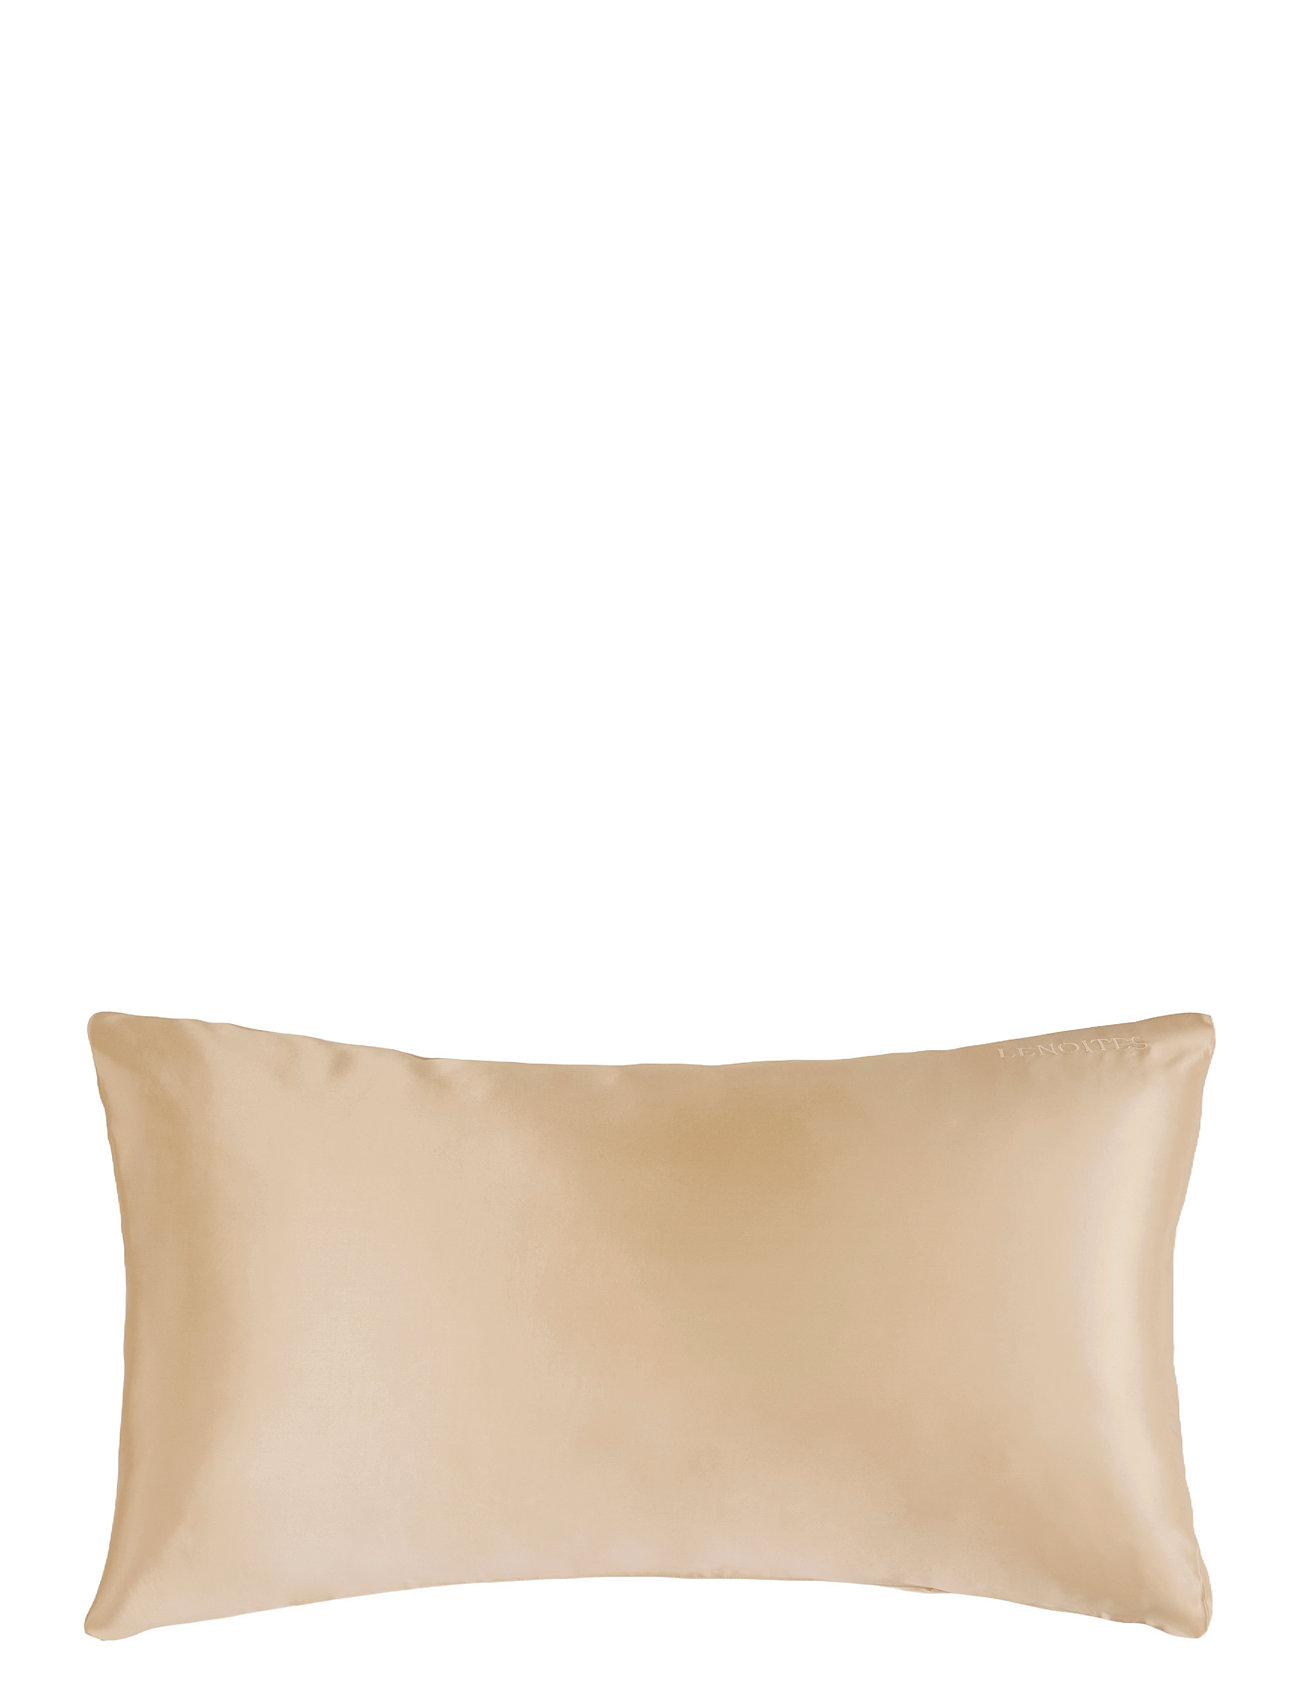 Mulberry Silk Pillowcase Home Textiles Bedtextiles Pillow Cases Beige Lenoites